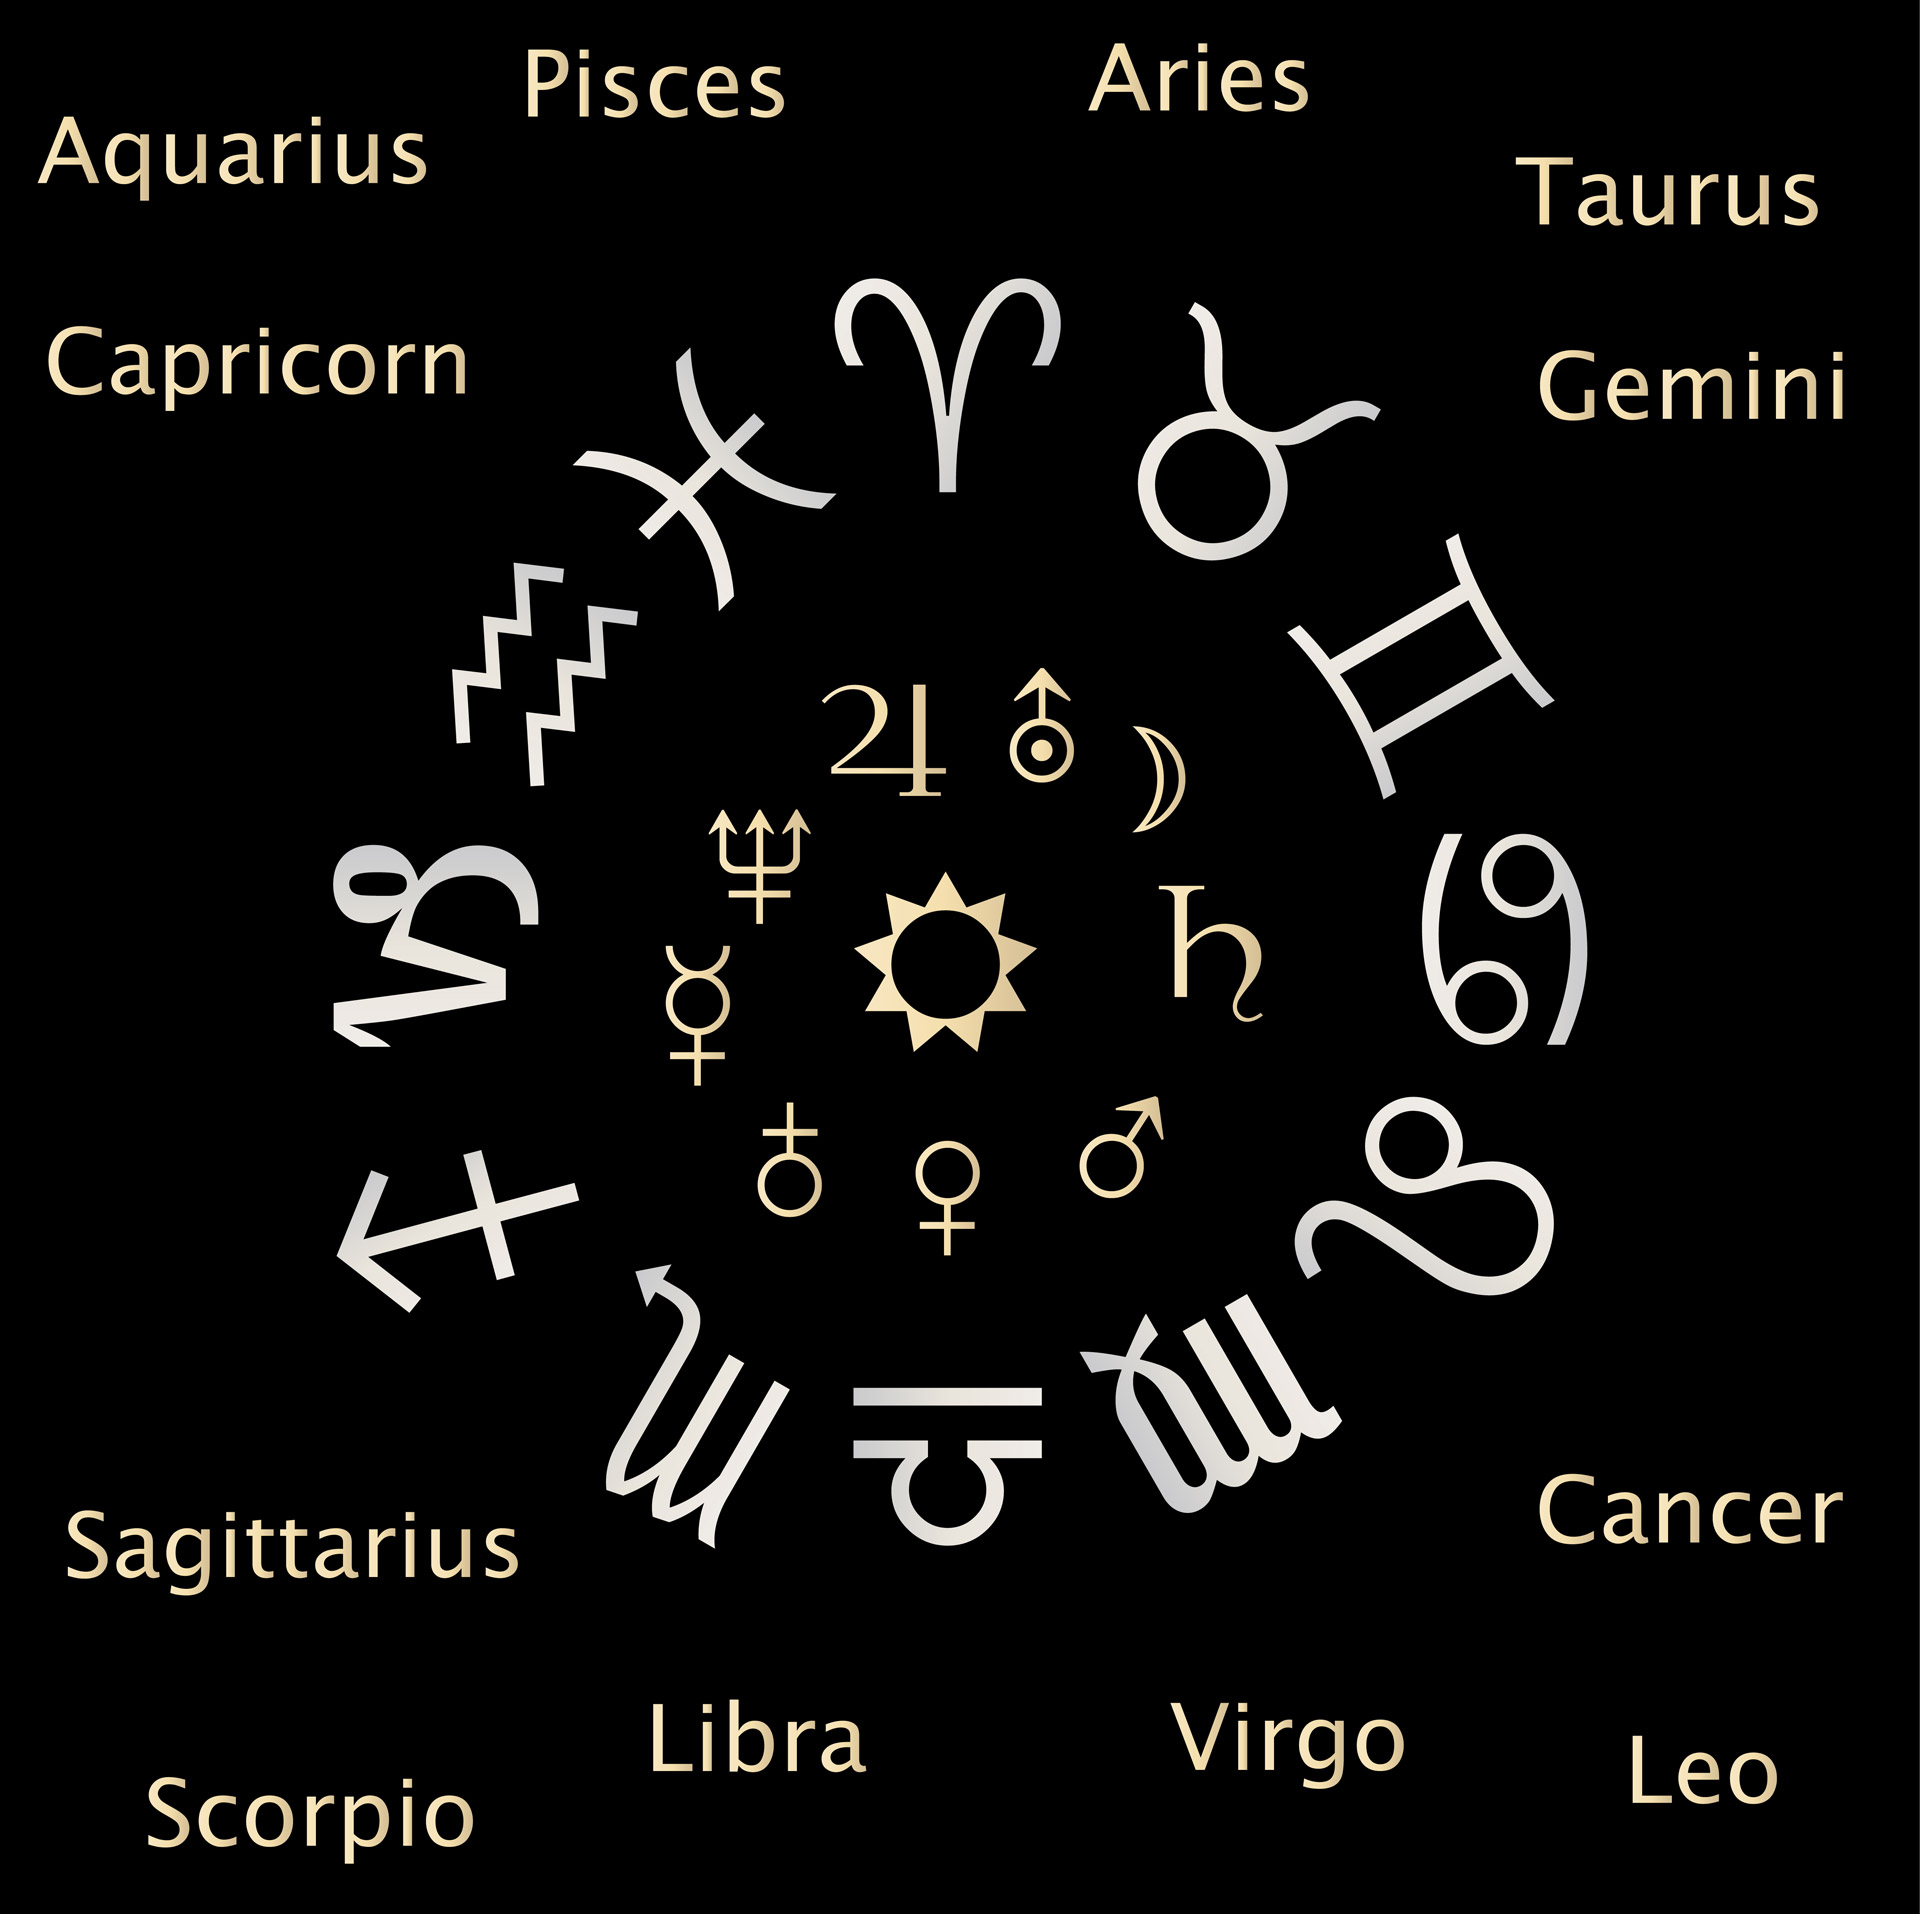 Astrologija,  Diagrama,  Astrologija & Nbsp,  Schema,  Zodiako,  Ženklai,  Simboliai,  Zodiako Ženklai,  Aries,  Taurus